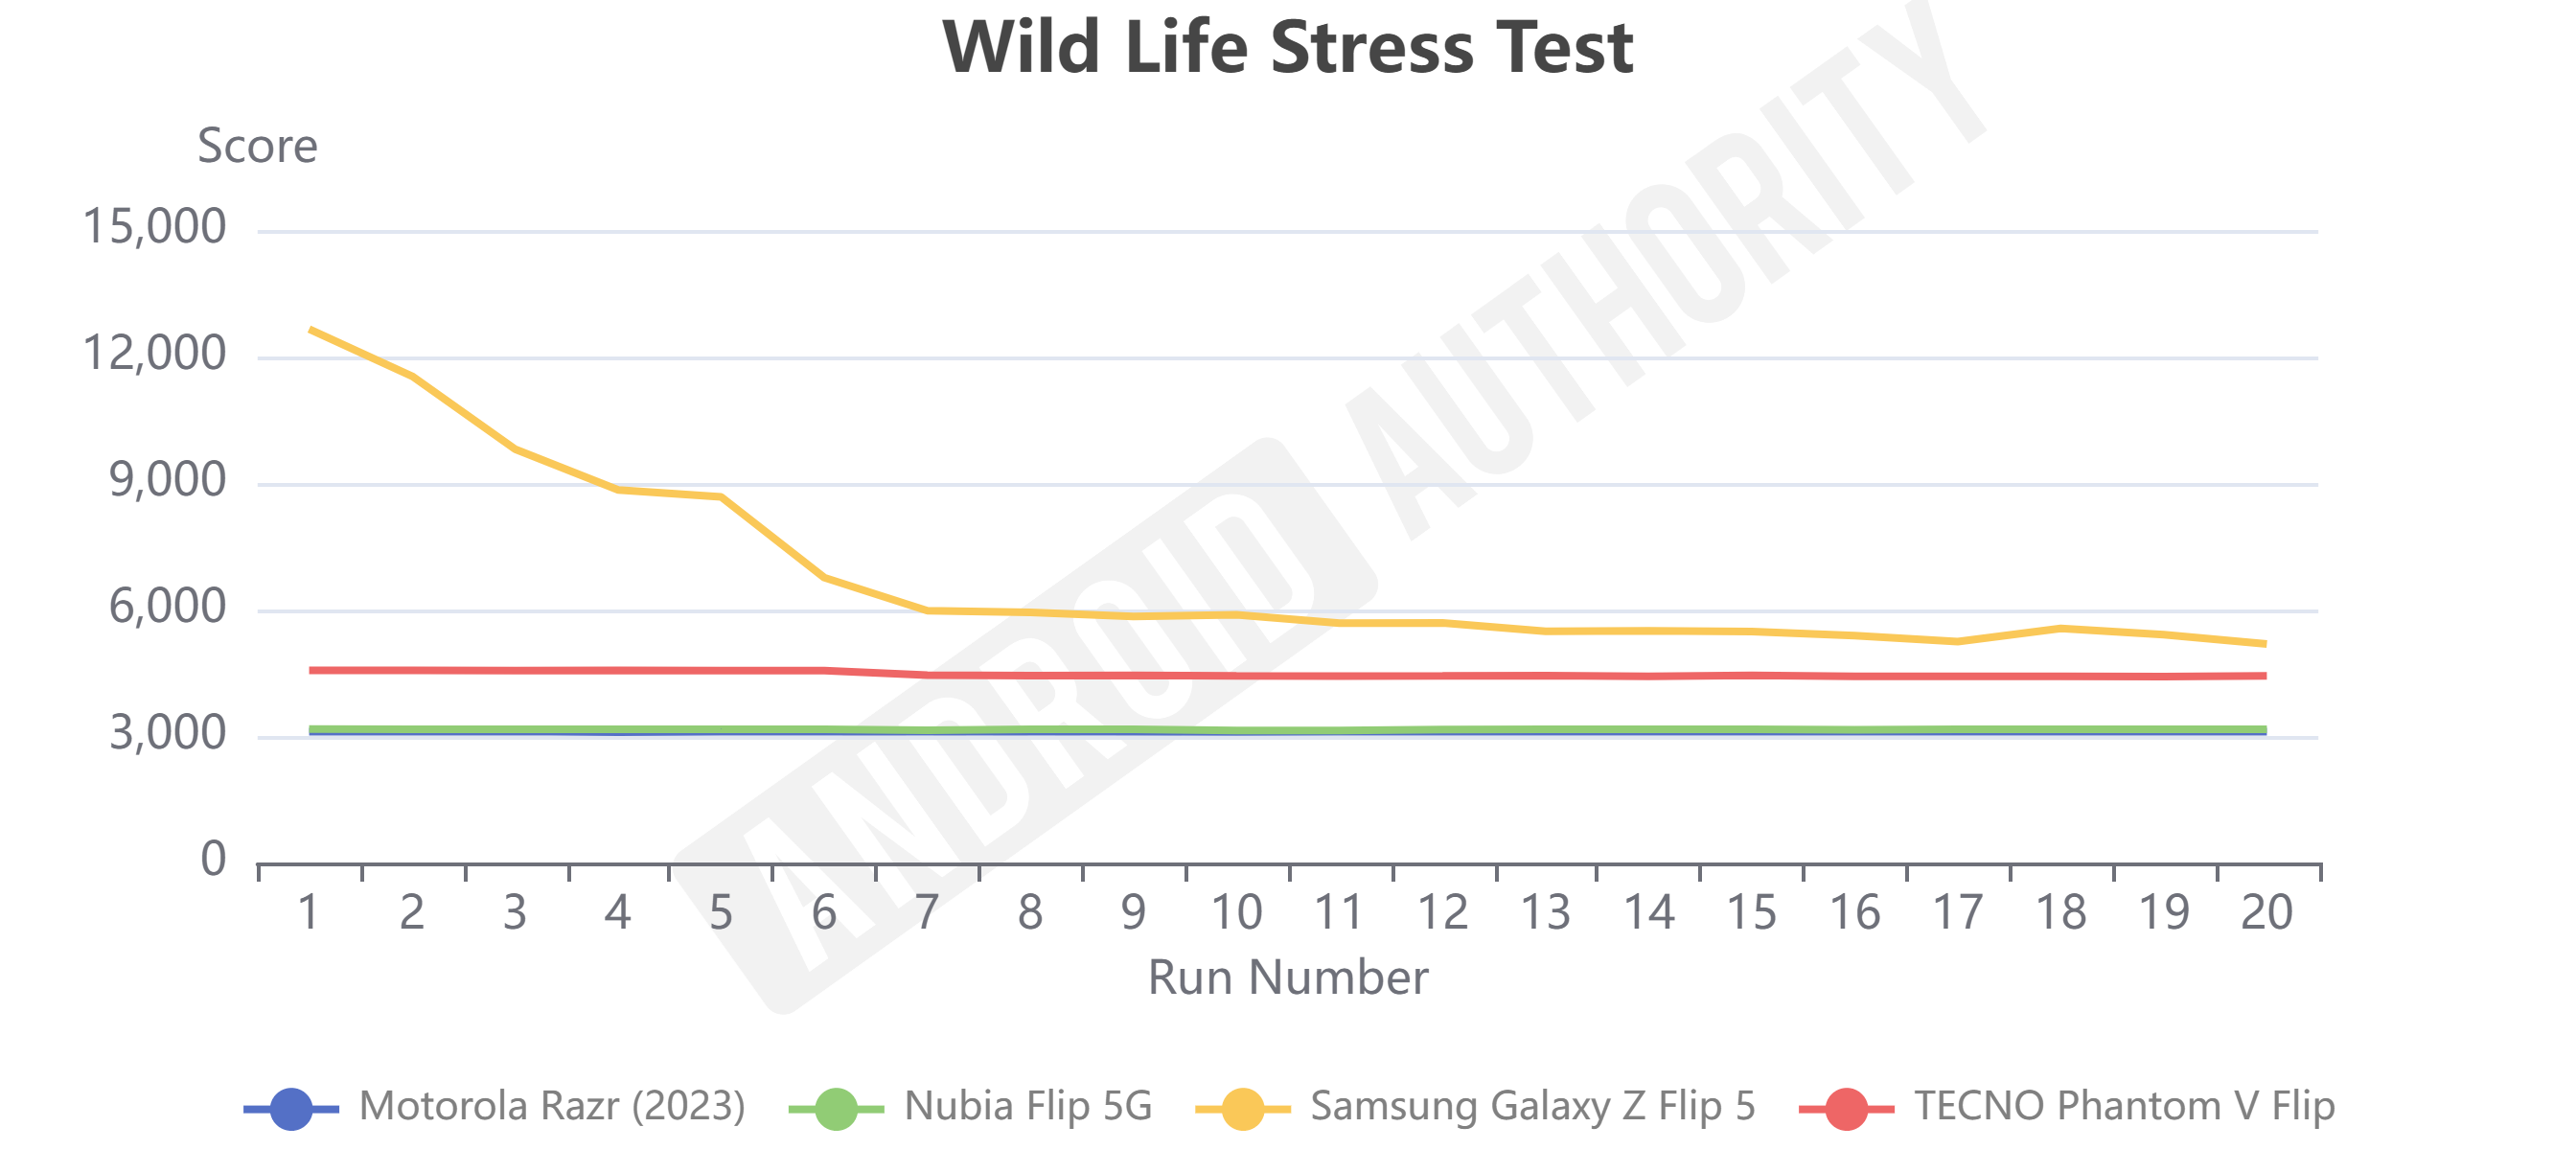 Nubia Flip 5G Wild Life Stress Test results.